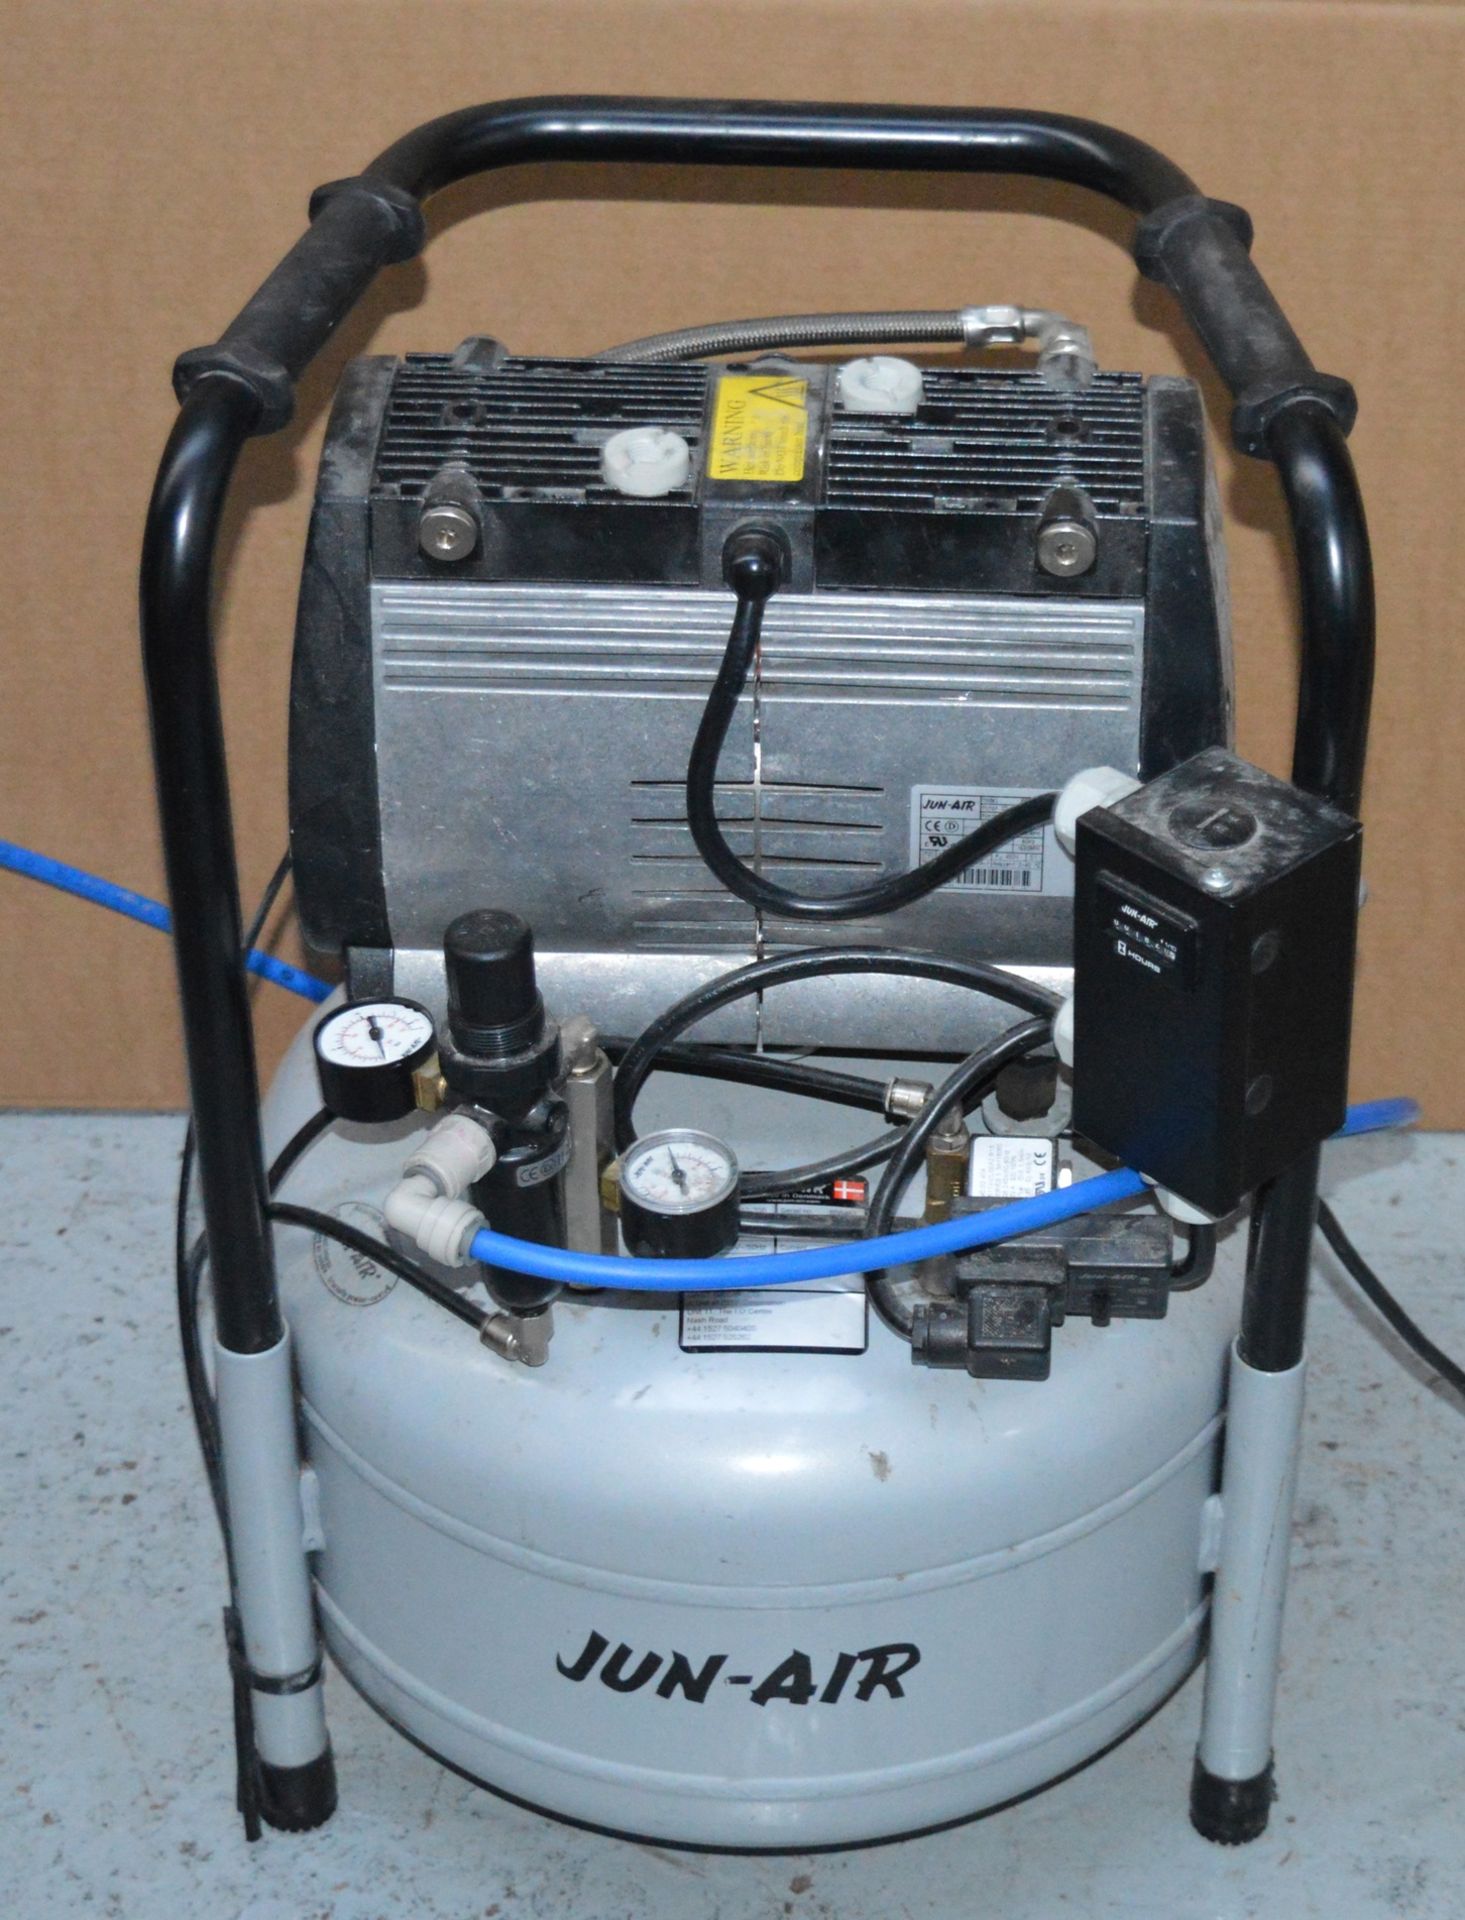 1 x Jun-Air OF302-25B Oil-free 25l Air Compressor - Good Working Order - Quiet Operation - Oil - Image 2 of 5